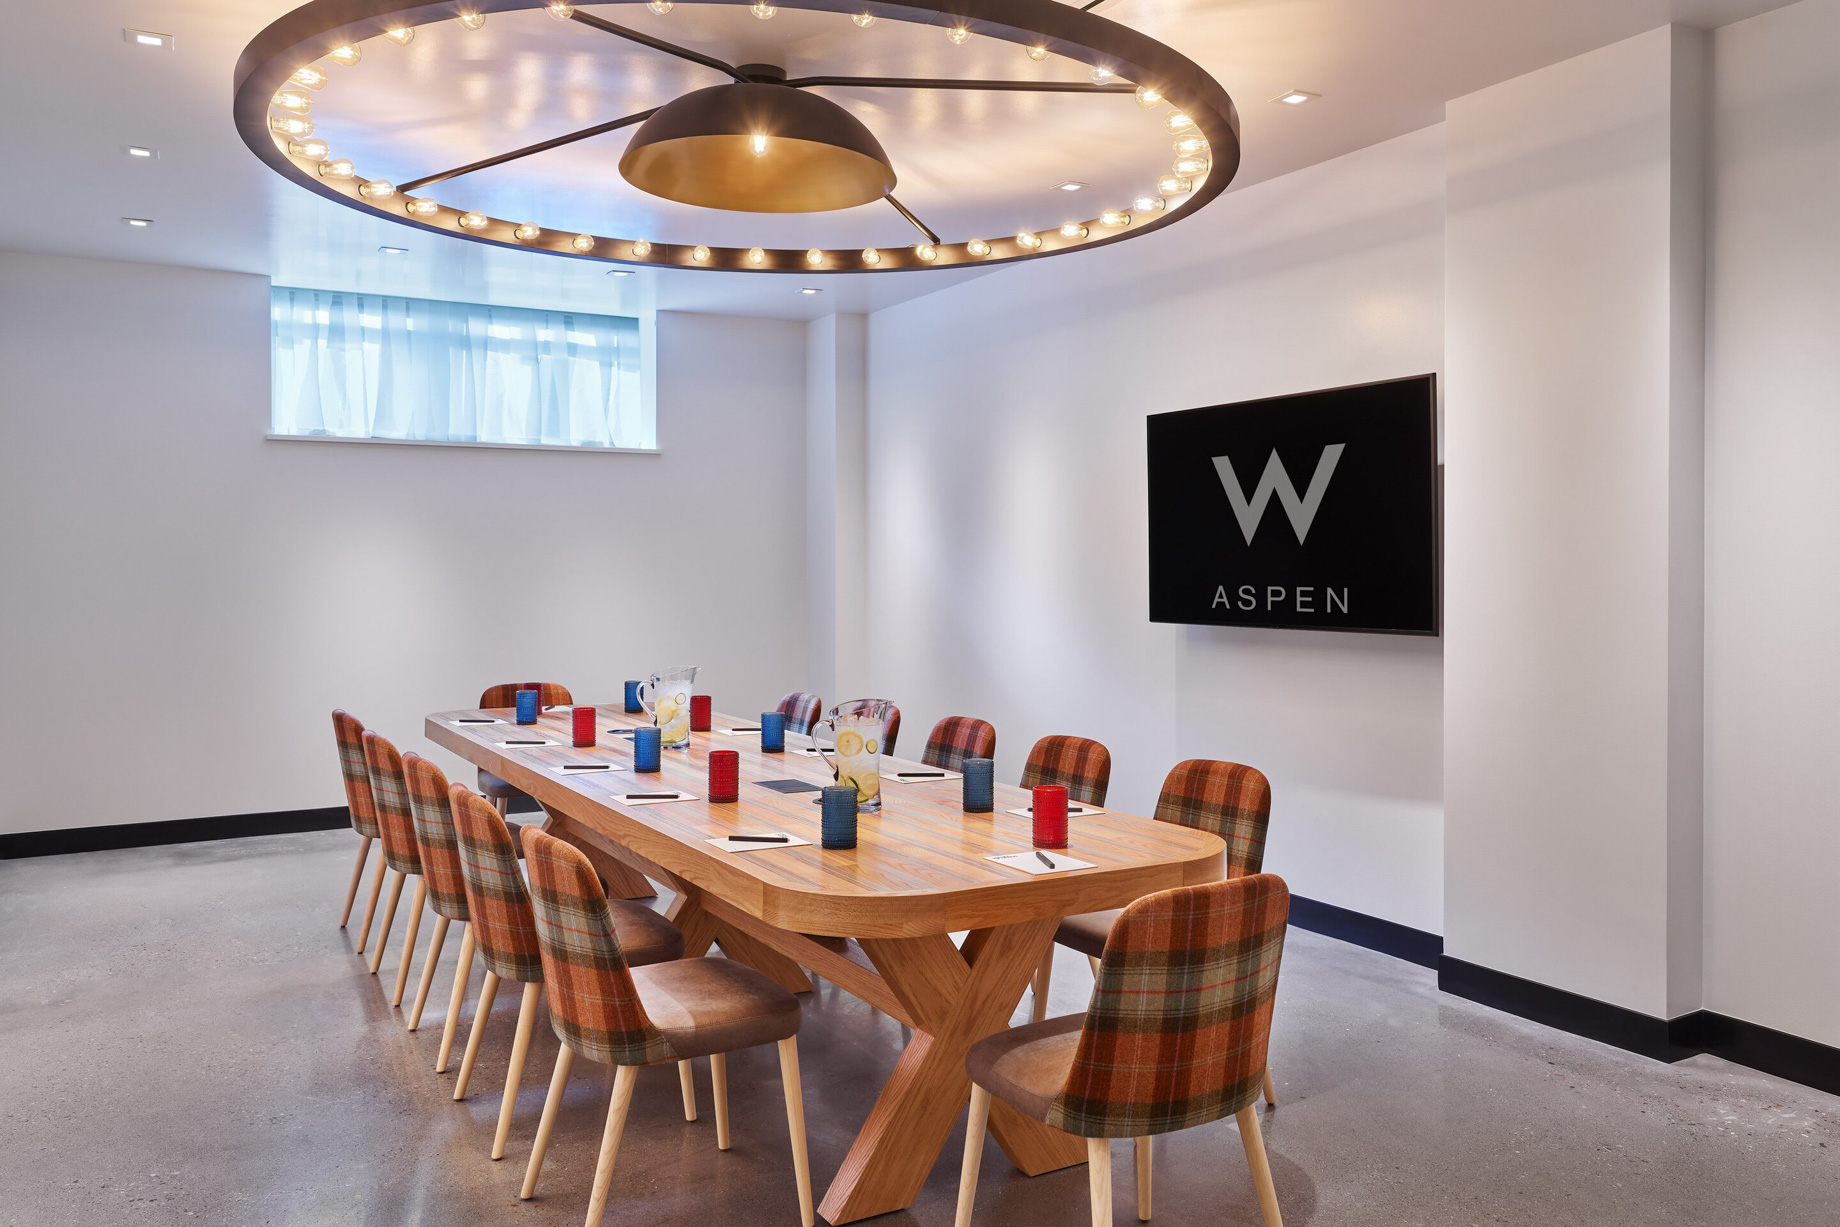 W Aspen Hotel – Aspen, CO, USA – Strategy Meeting Room Boardroom Setup